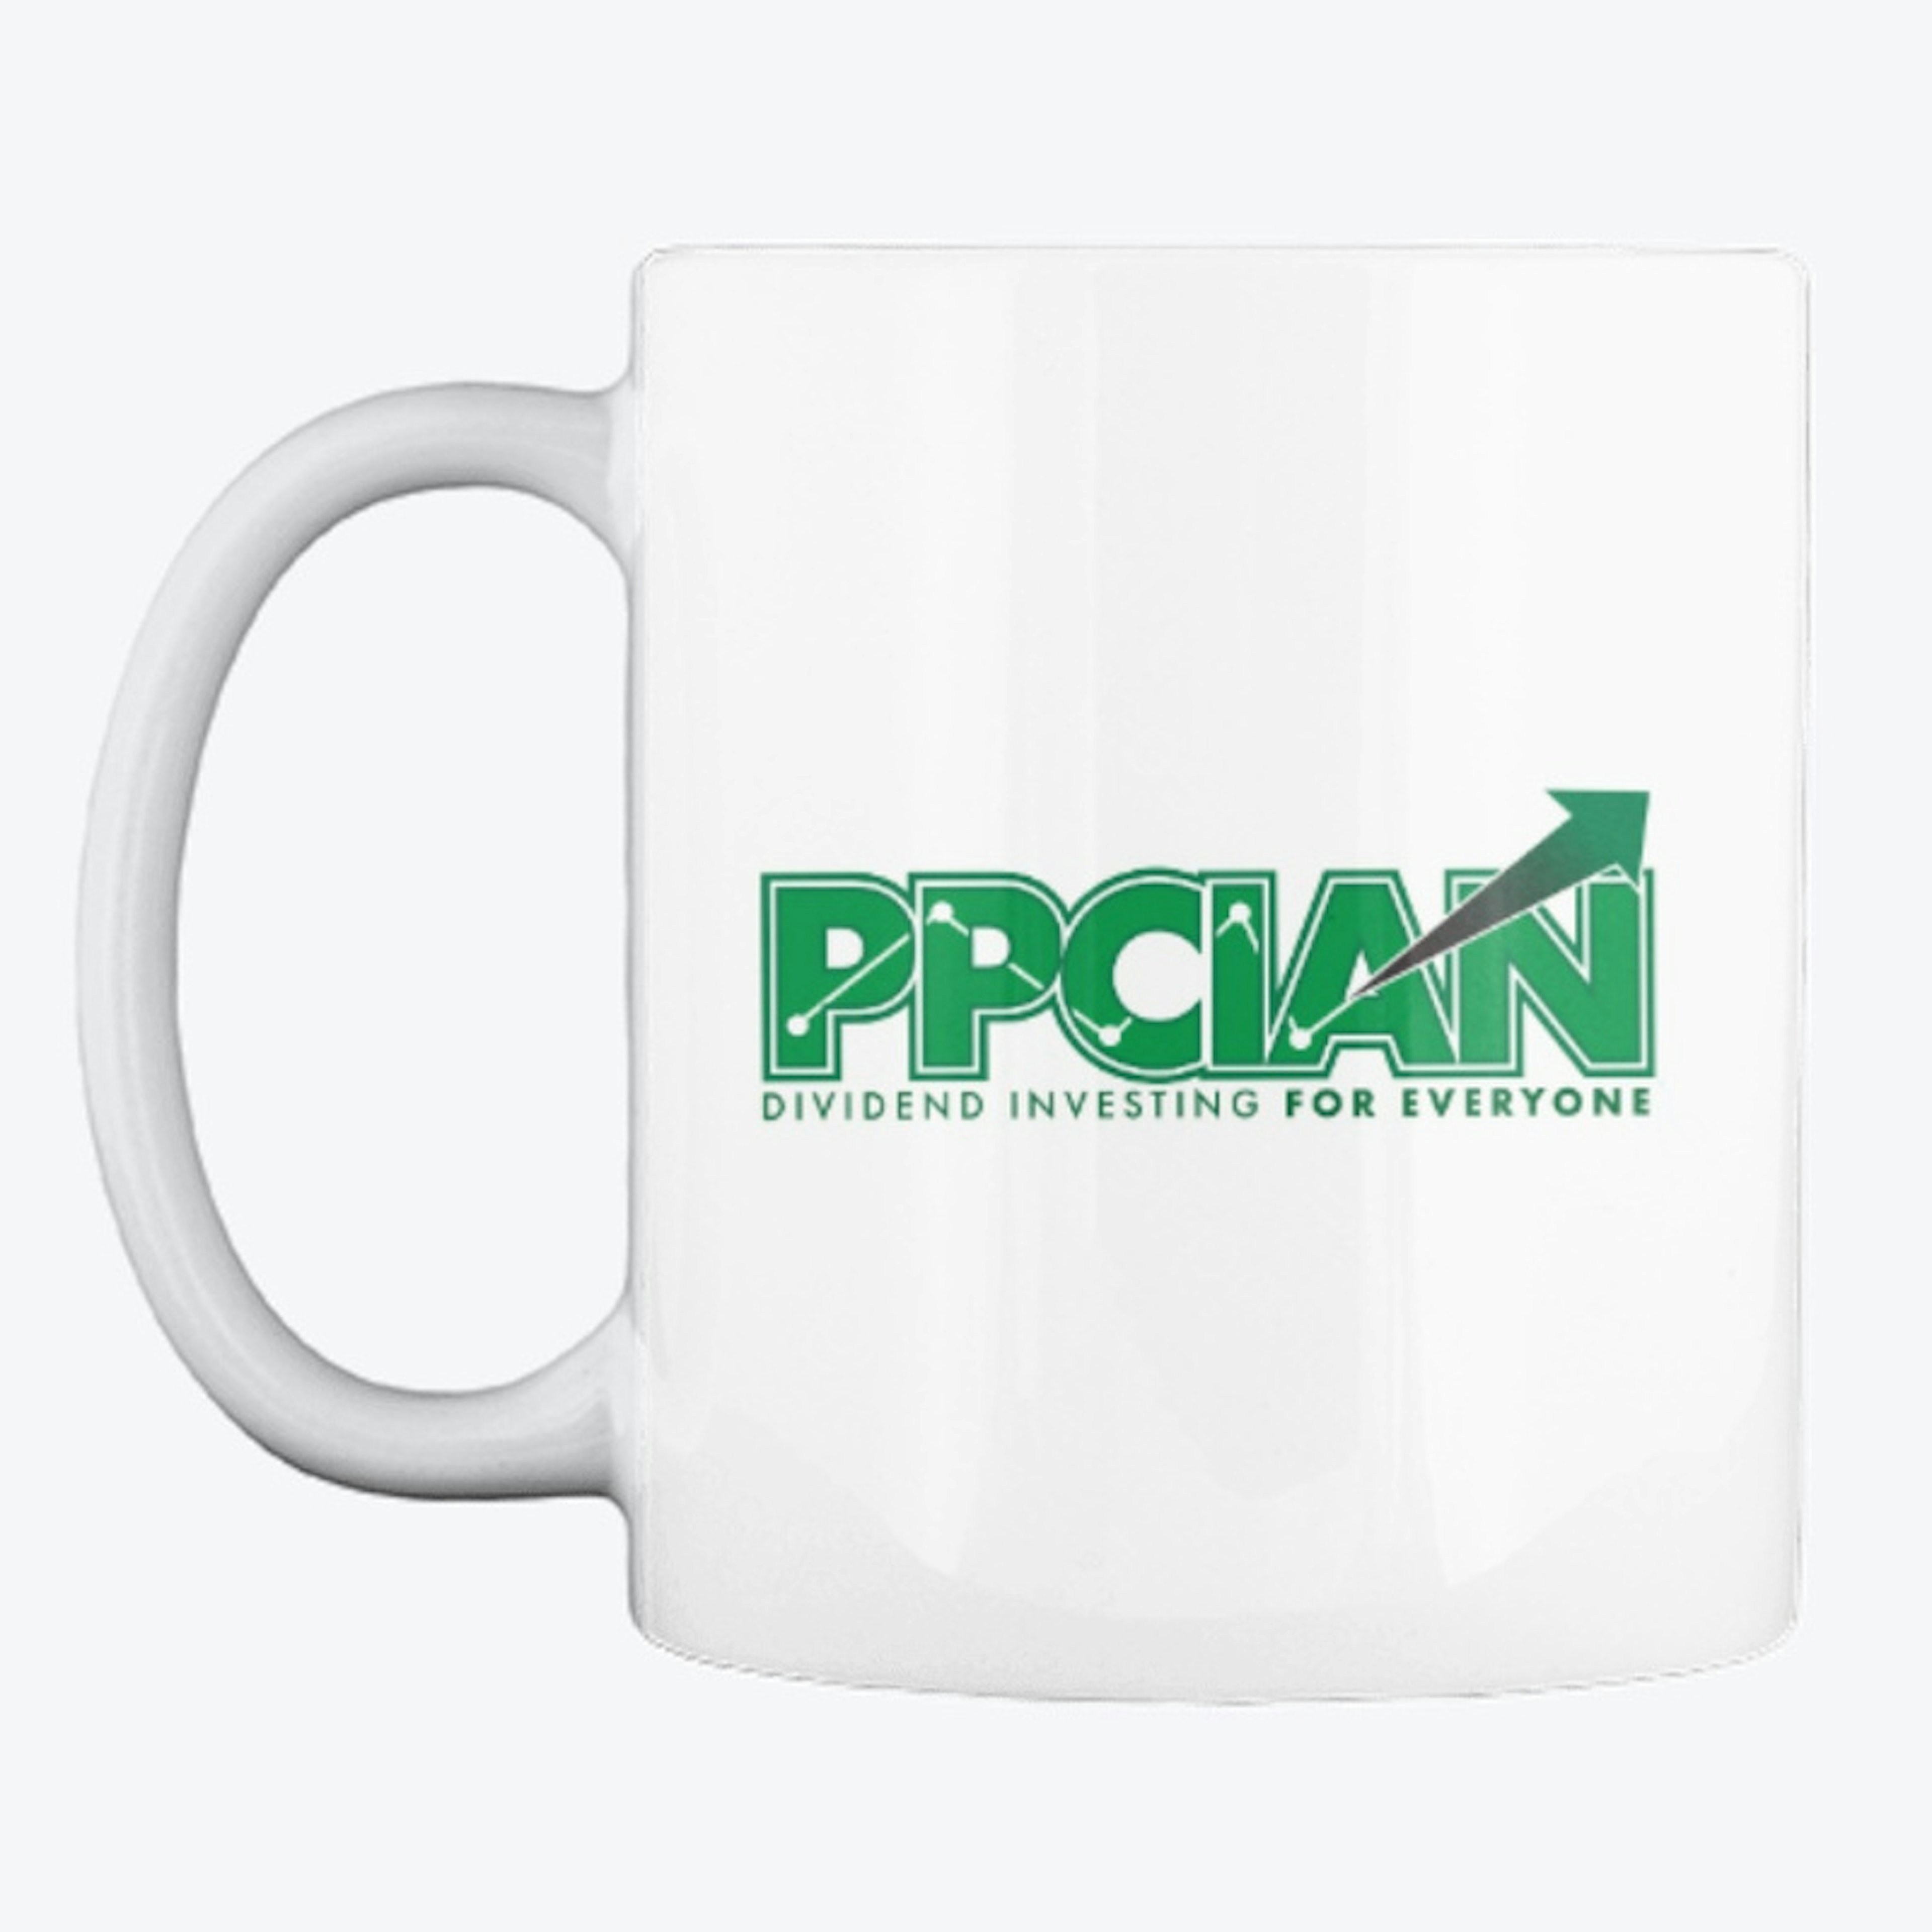 PPC Ian Dividend Investing Mug (White)